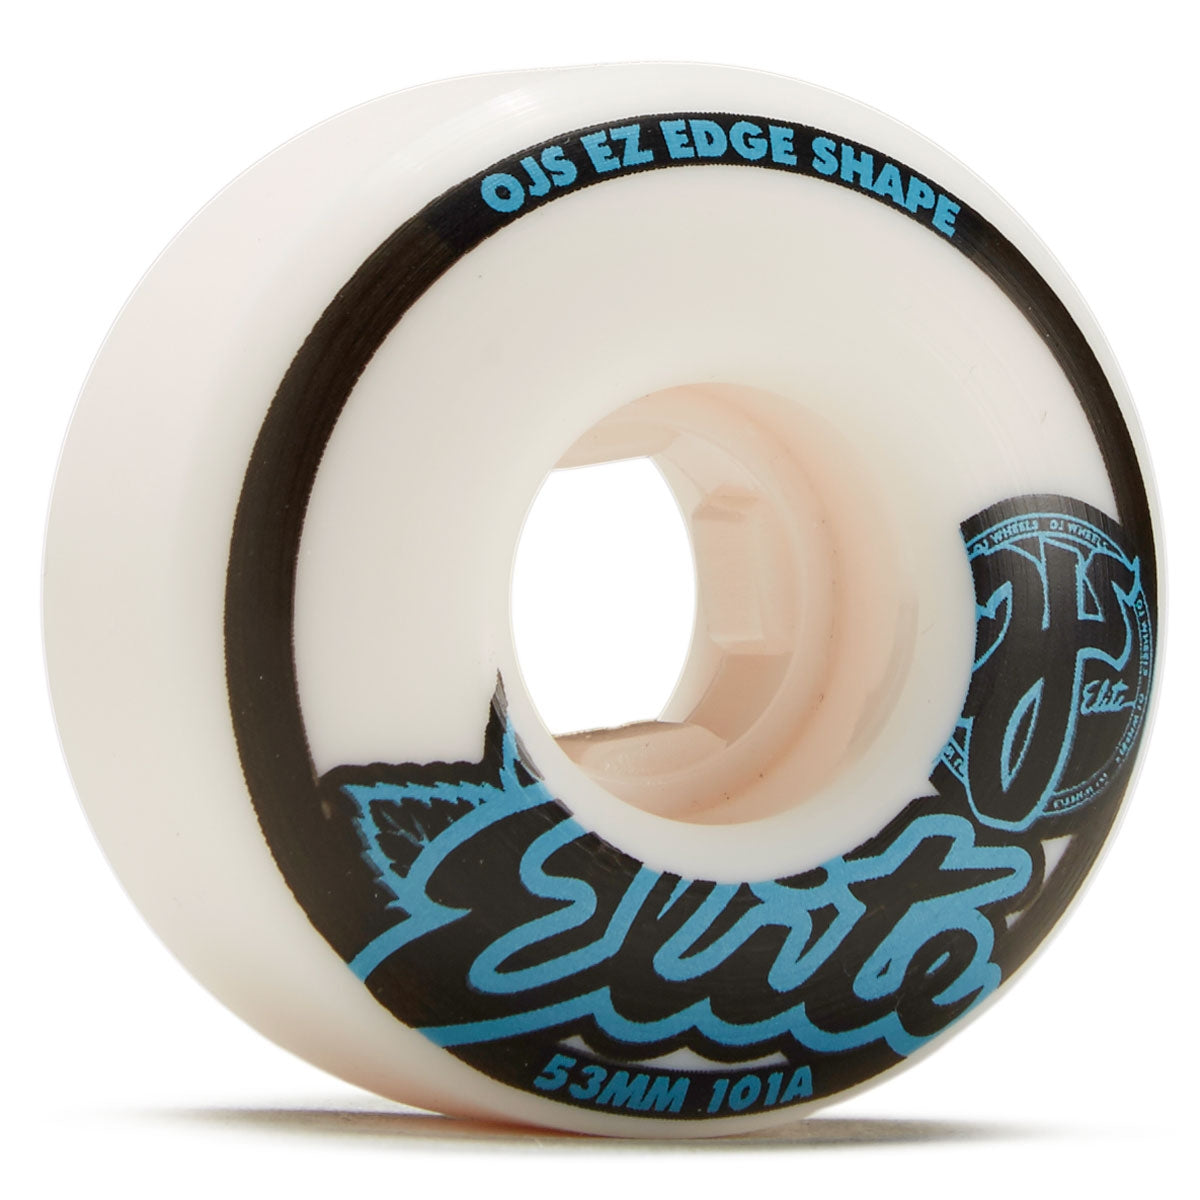 OJ Elite EZ EDGE 101a Skateboard Wheels - 53mm image 1